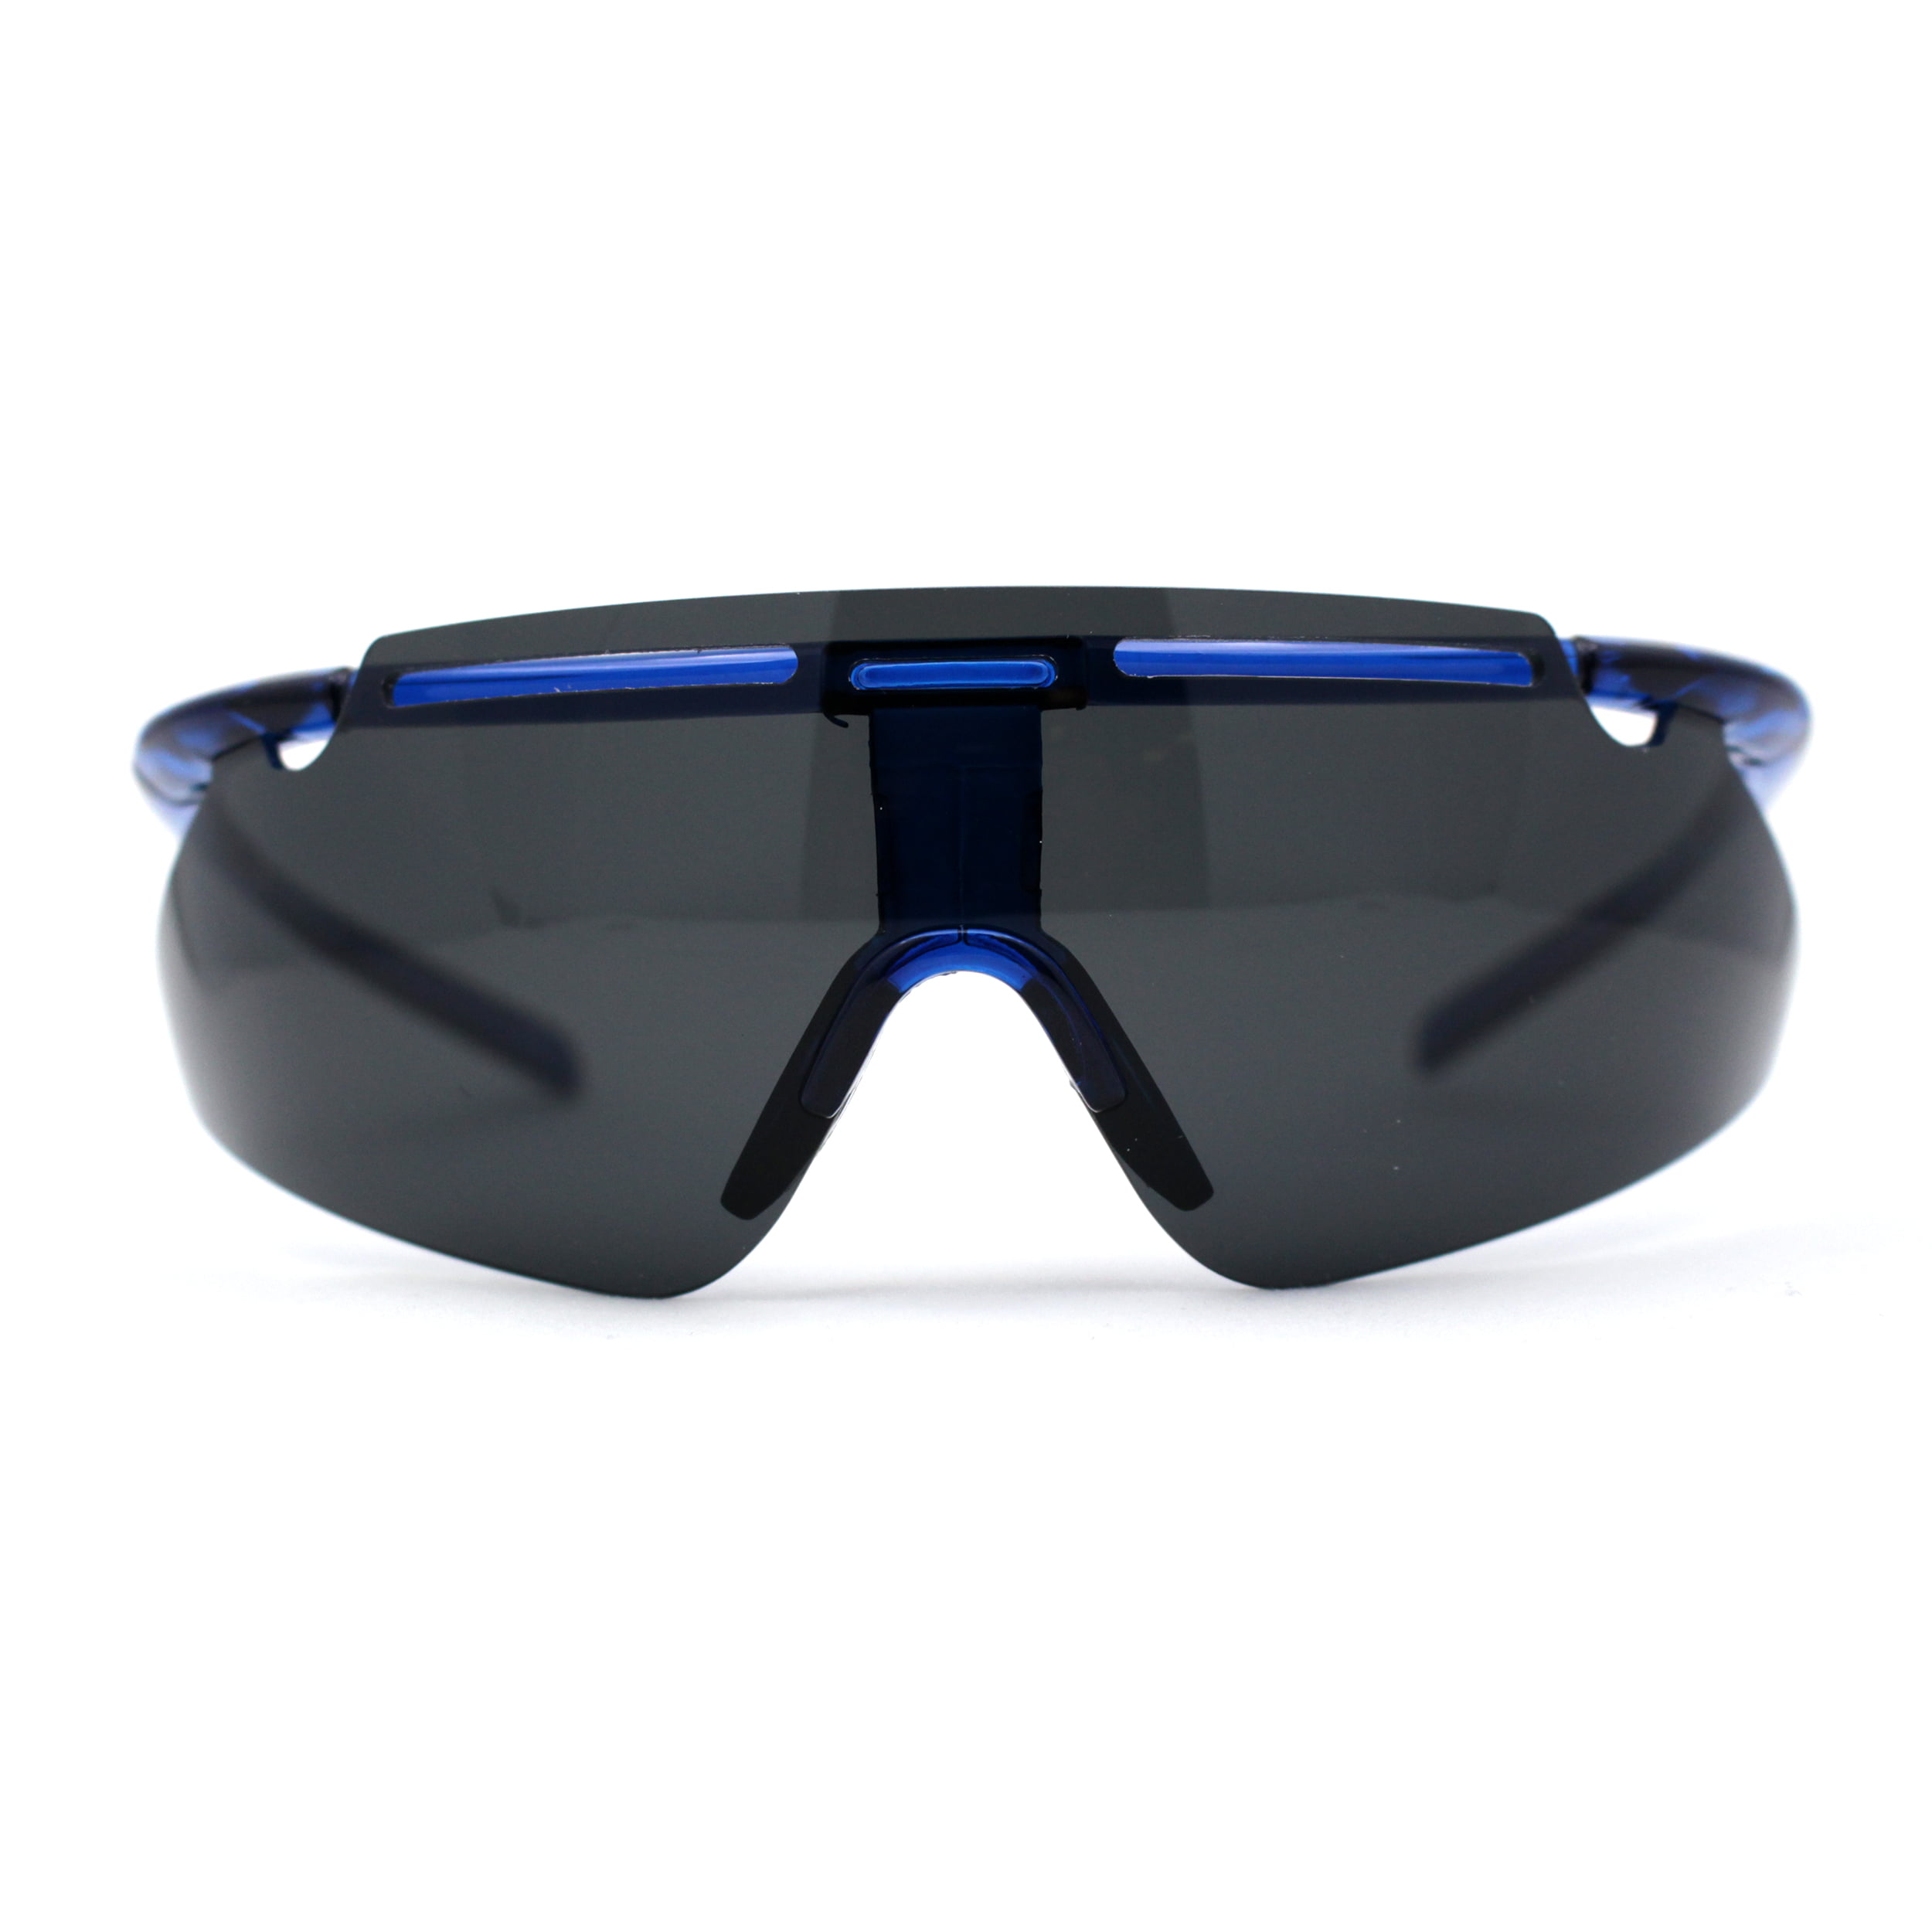 SA106 Mens Minimalist Half Rim Shield Sport Wrap Around Sunglasses All Black, Men's, Size: 5 3/4 (146mm) x 2 1/8 (55mm)